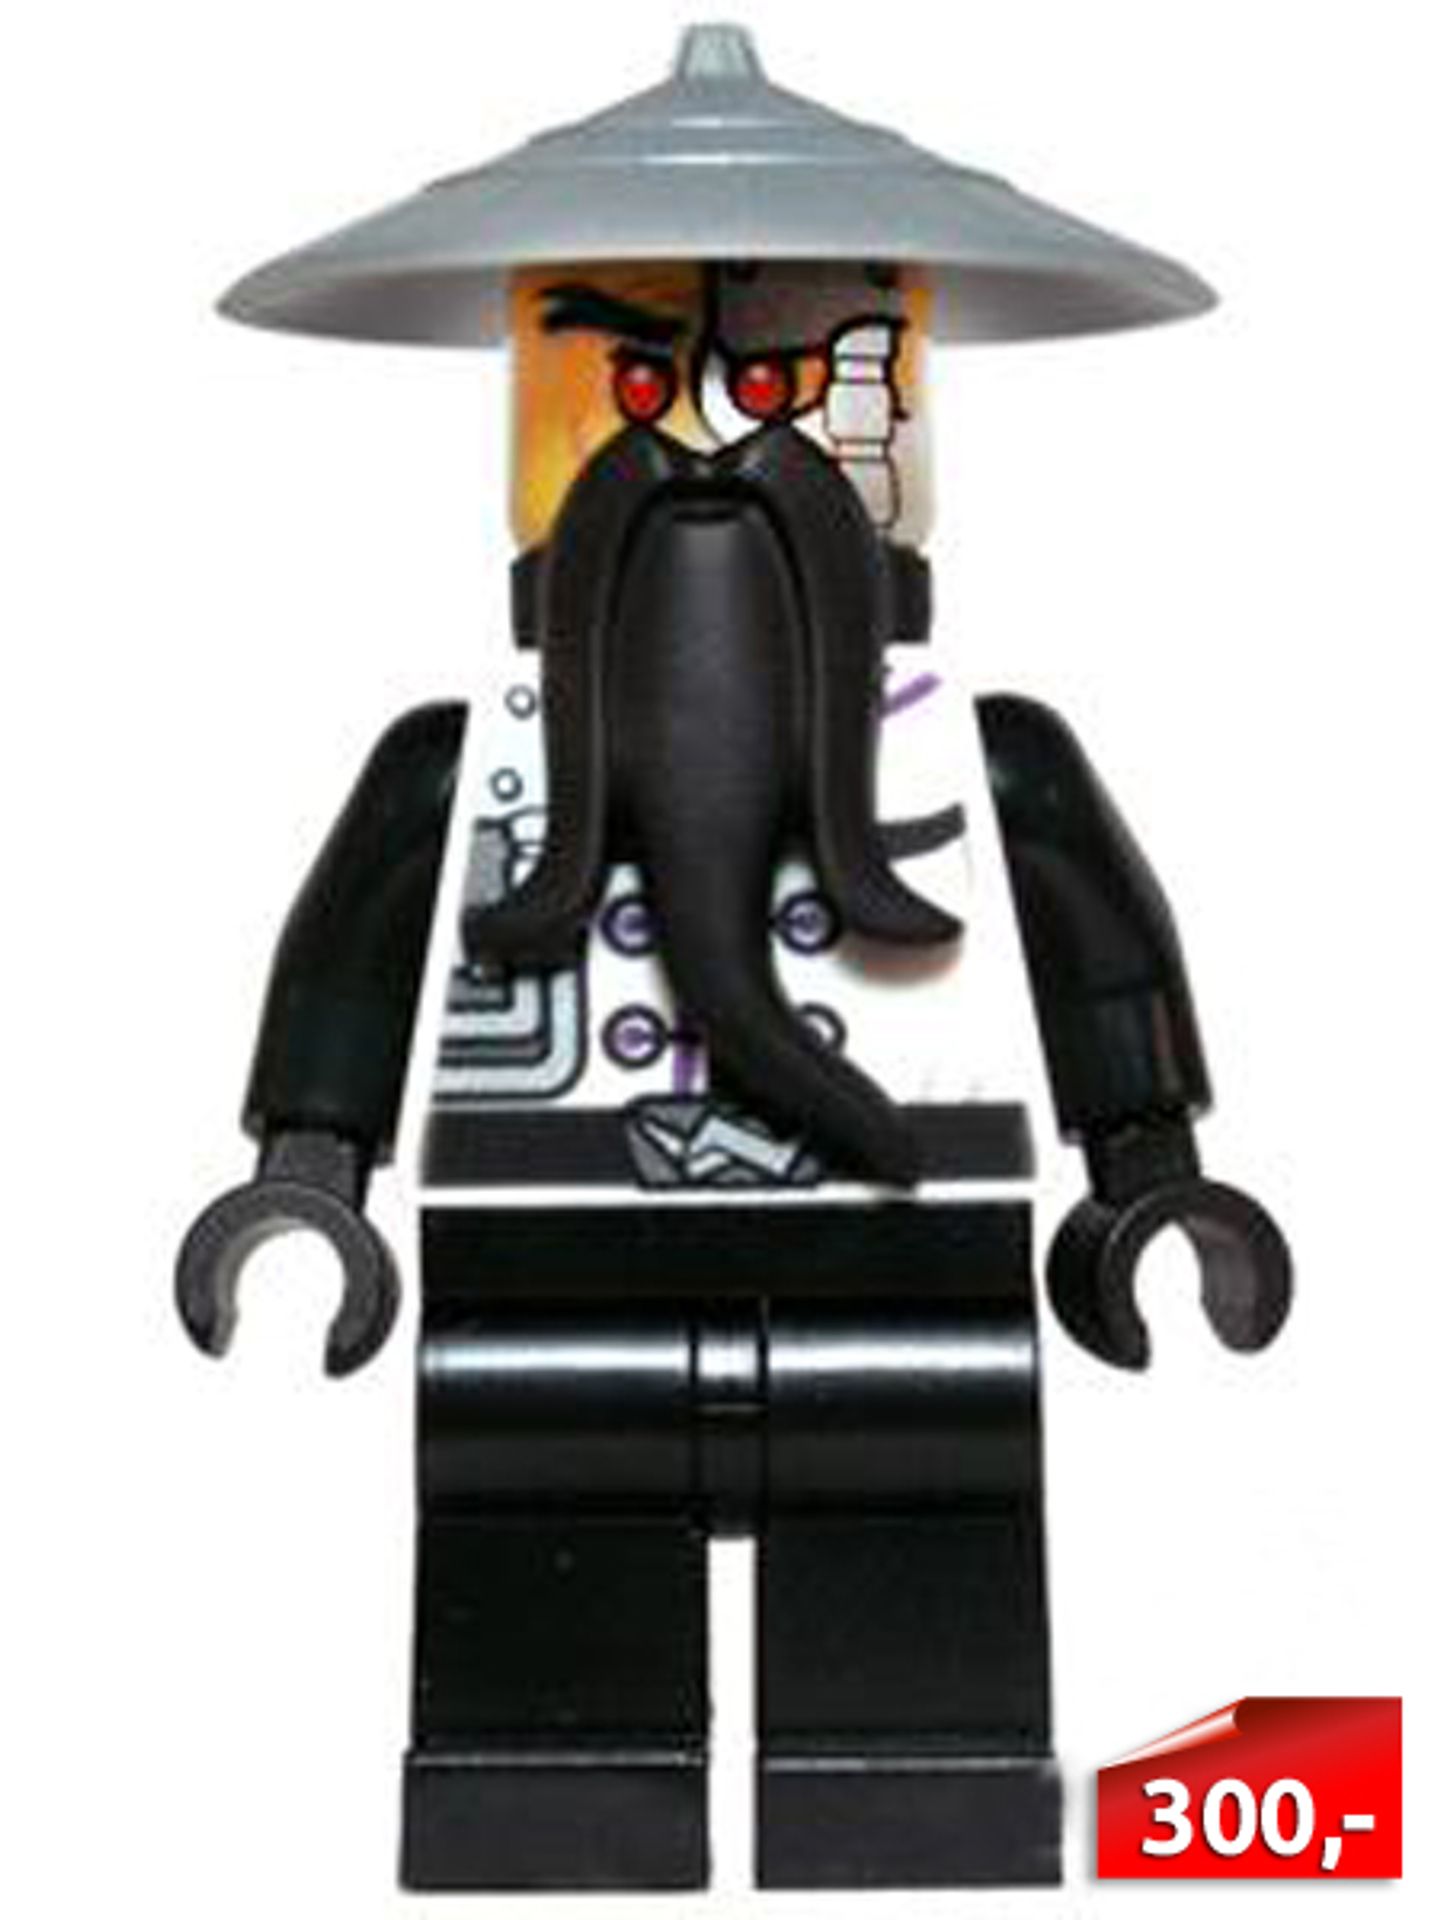 LEGO figurka Ninjago zlý evil sensei Wu - 300 Kč - GALERIE: Cenné LEGO figurky (9/12)